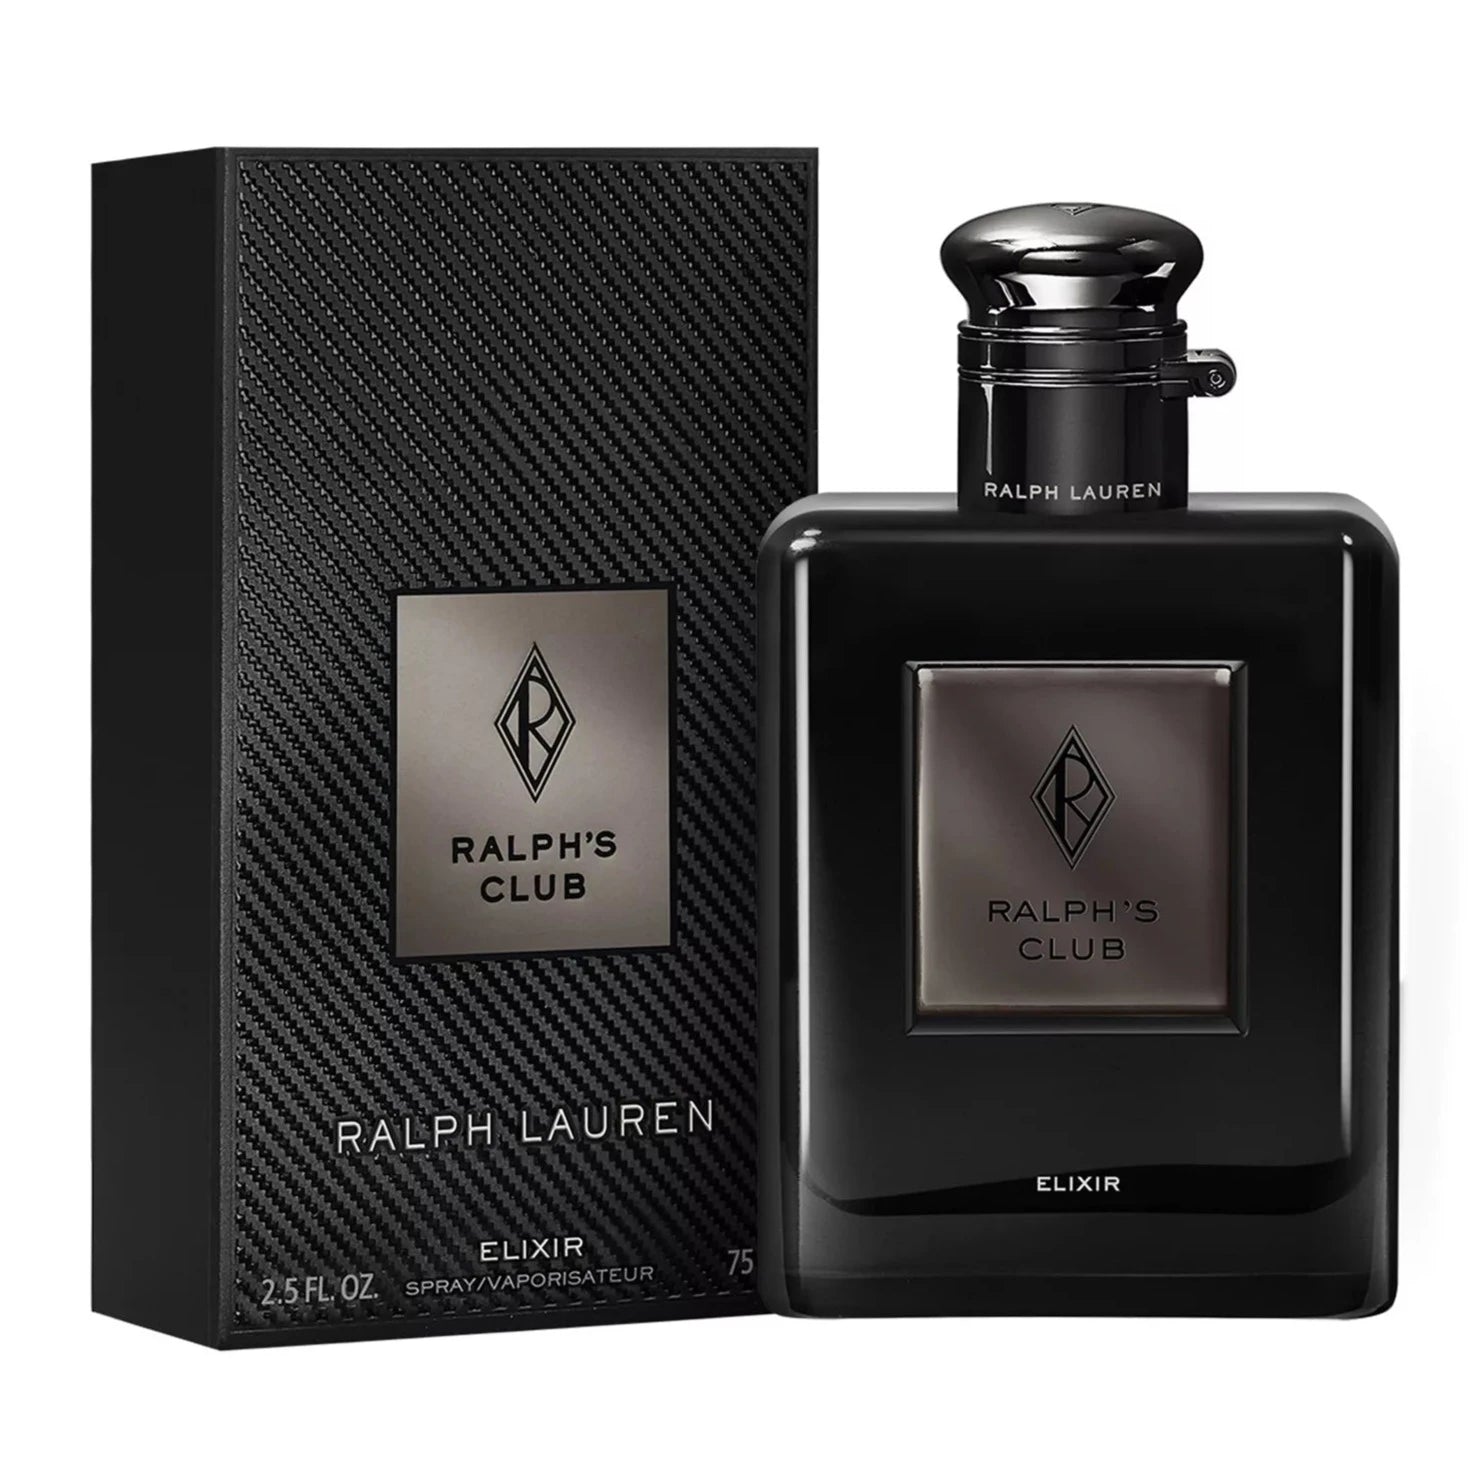 Perfume Ralph Lauren Ralph's Club Elixir Parfum (M) / 75 ml - 3605972831871,36059712831095- Prive Perfumes Honduras